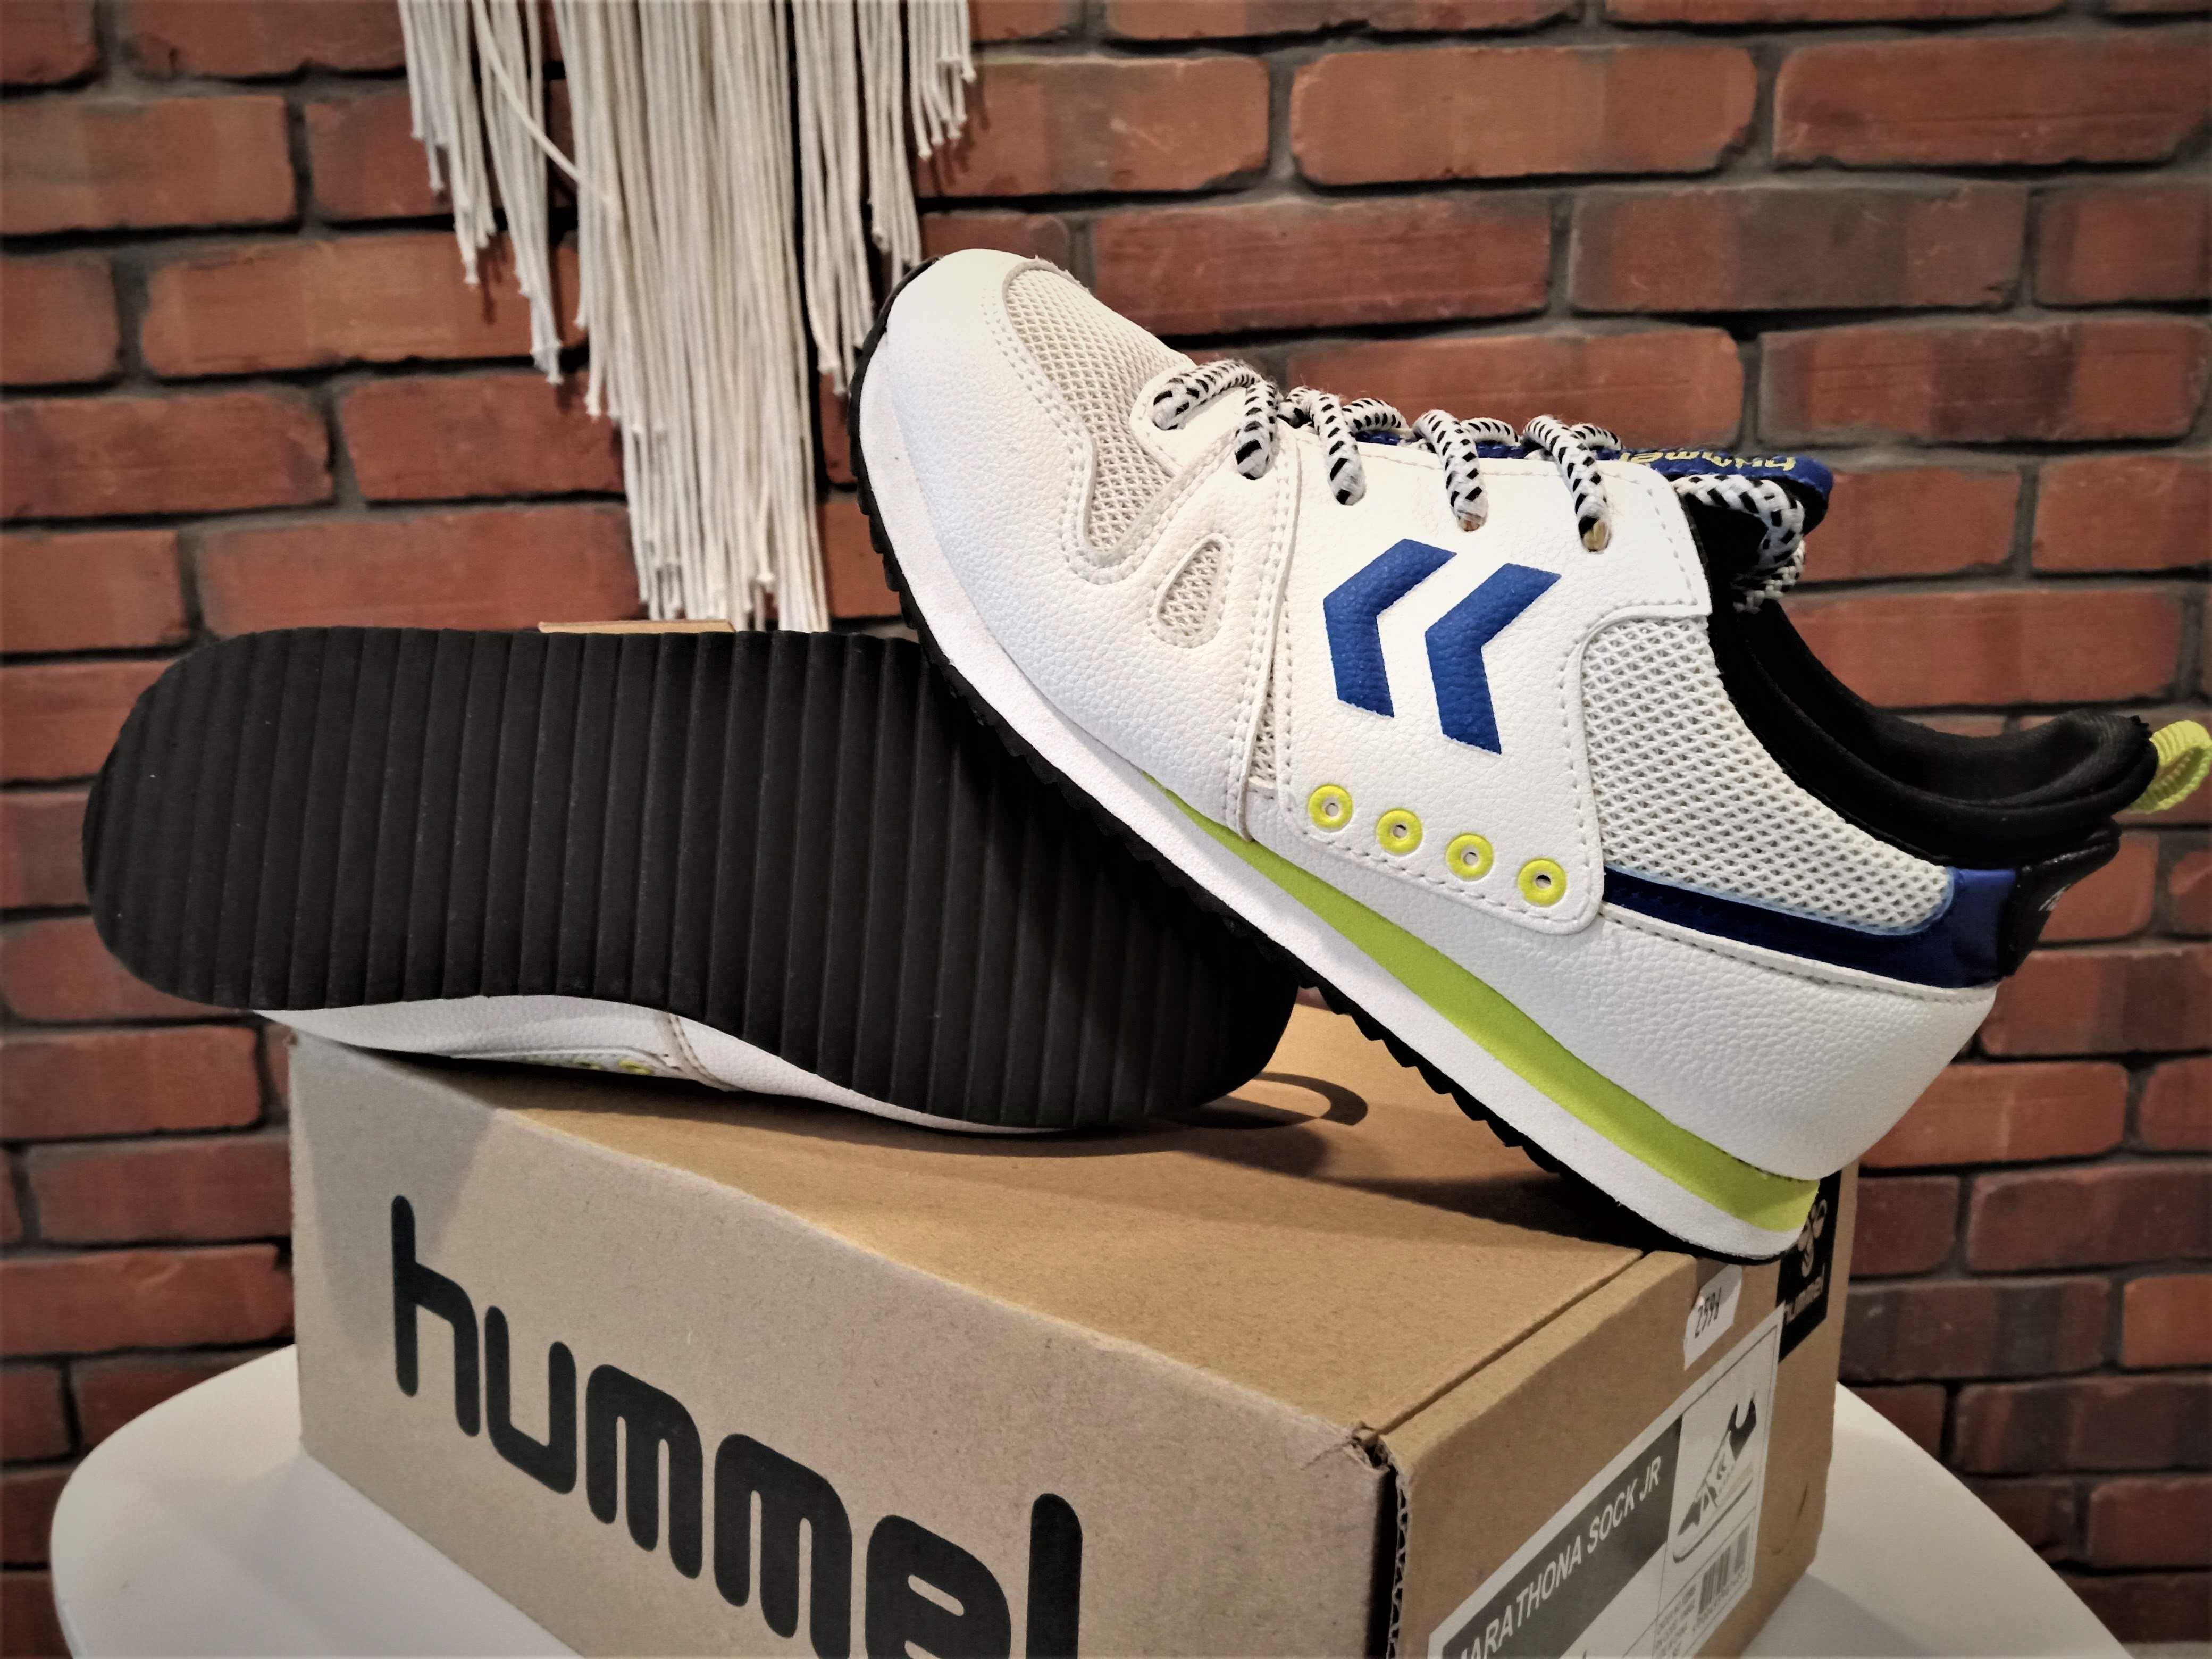 HUMMEL marathona NOWE, adidasy sneakersy unisex rozm 31 (18 cm)